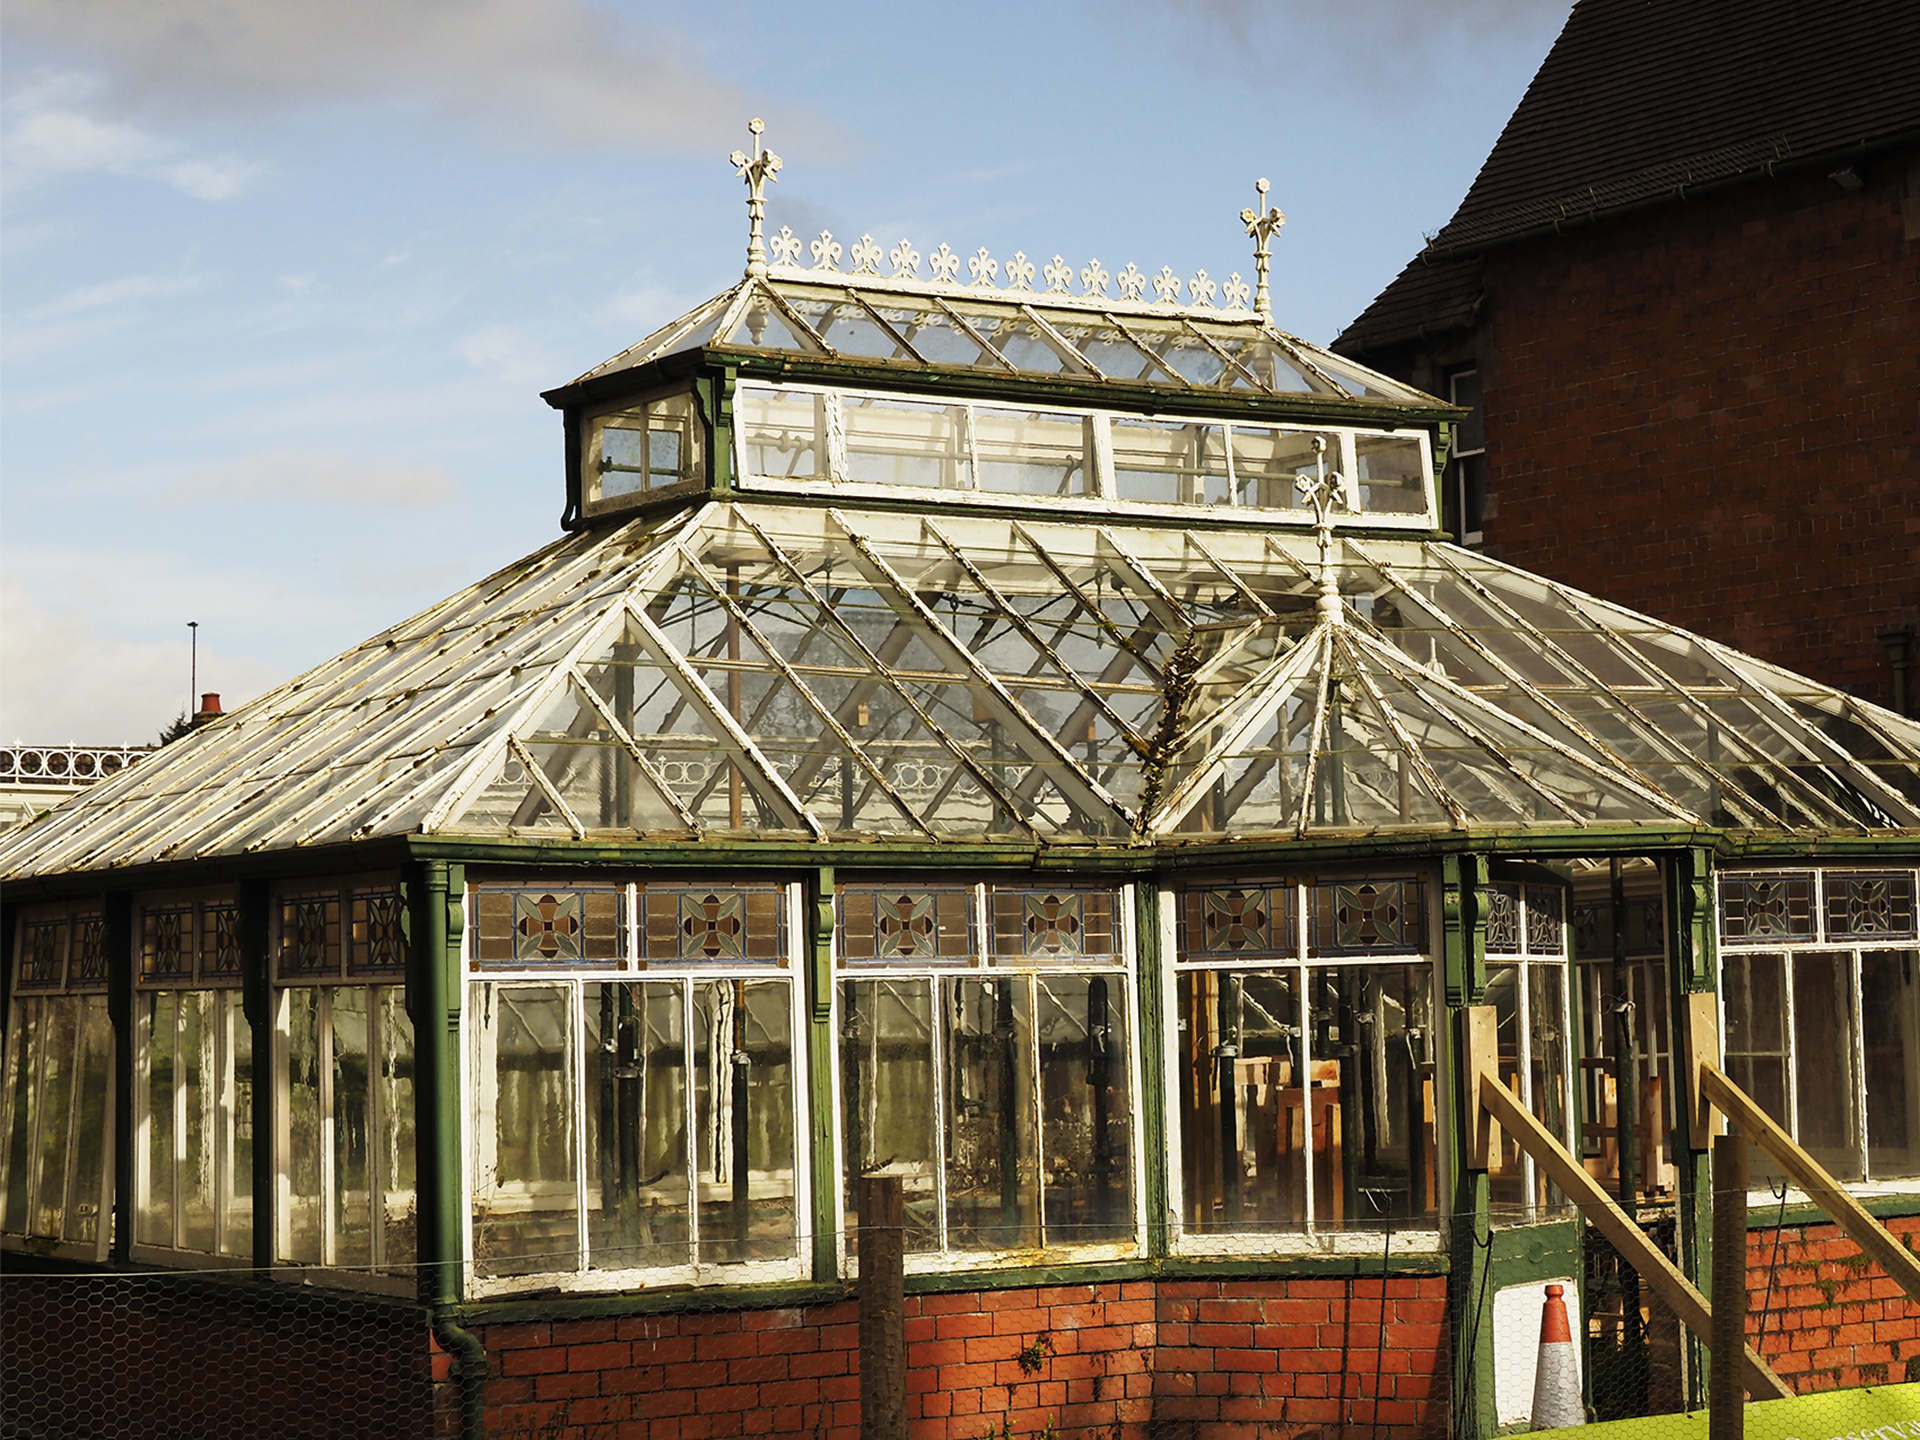 Horticultural glass shropshire